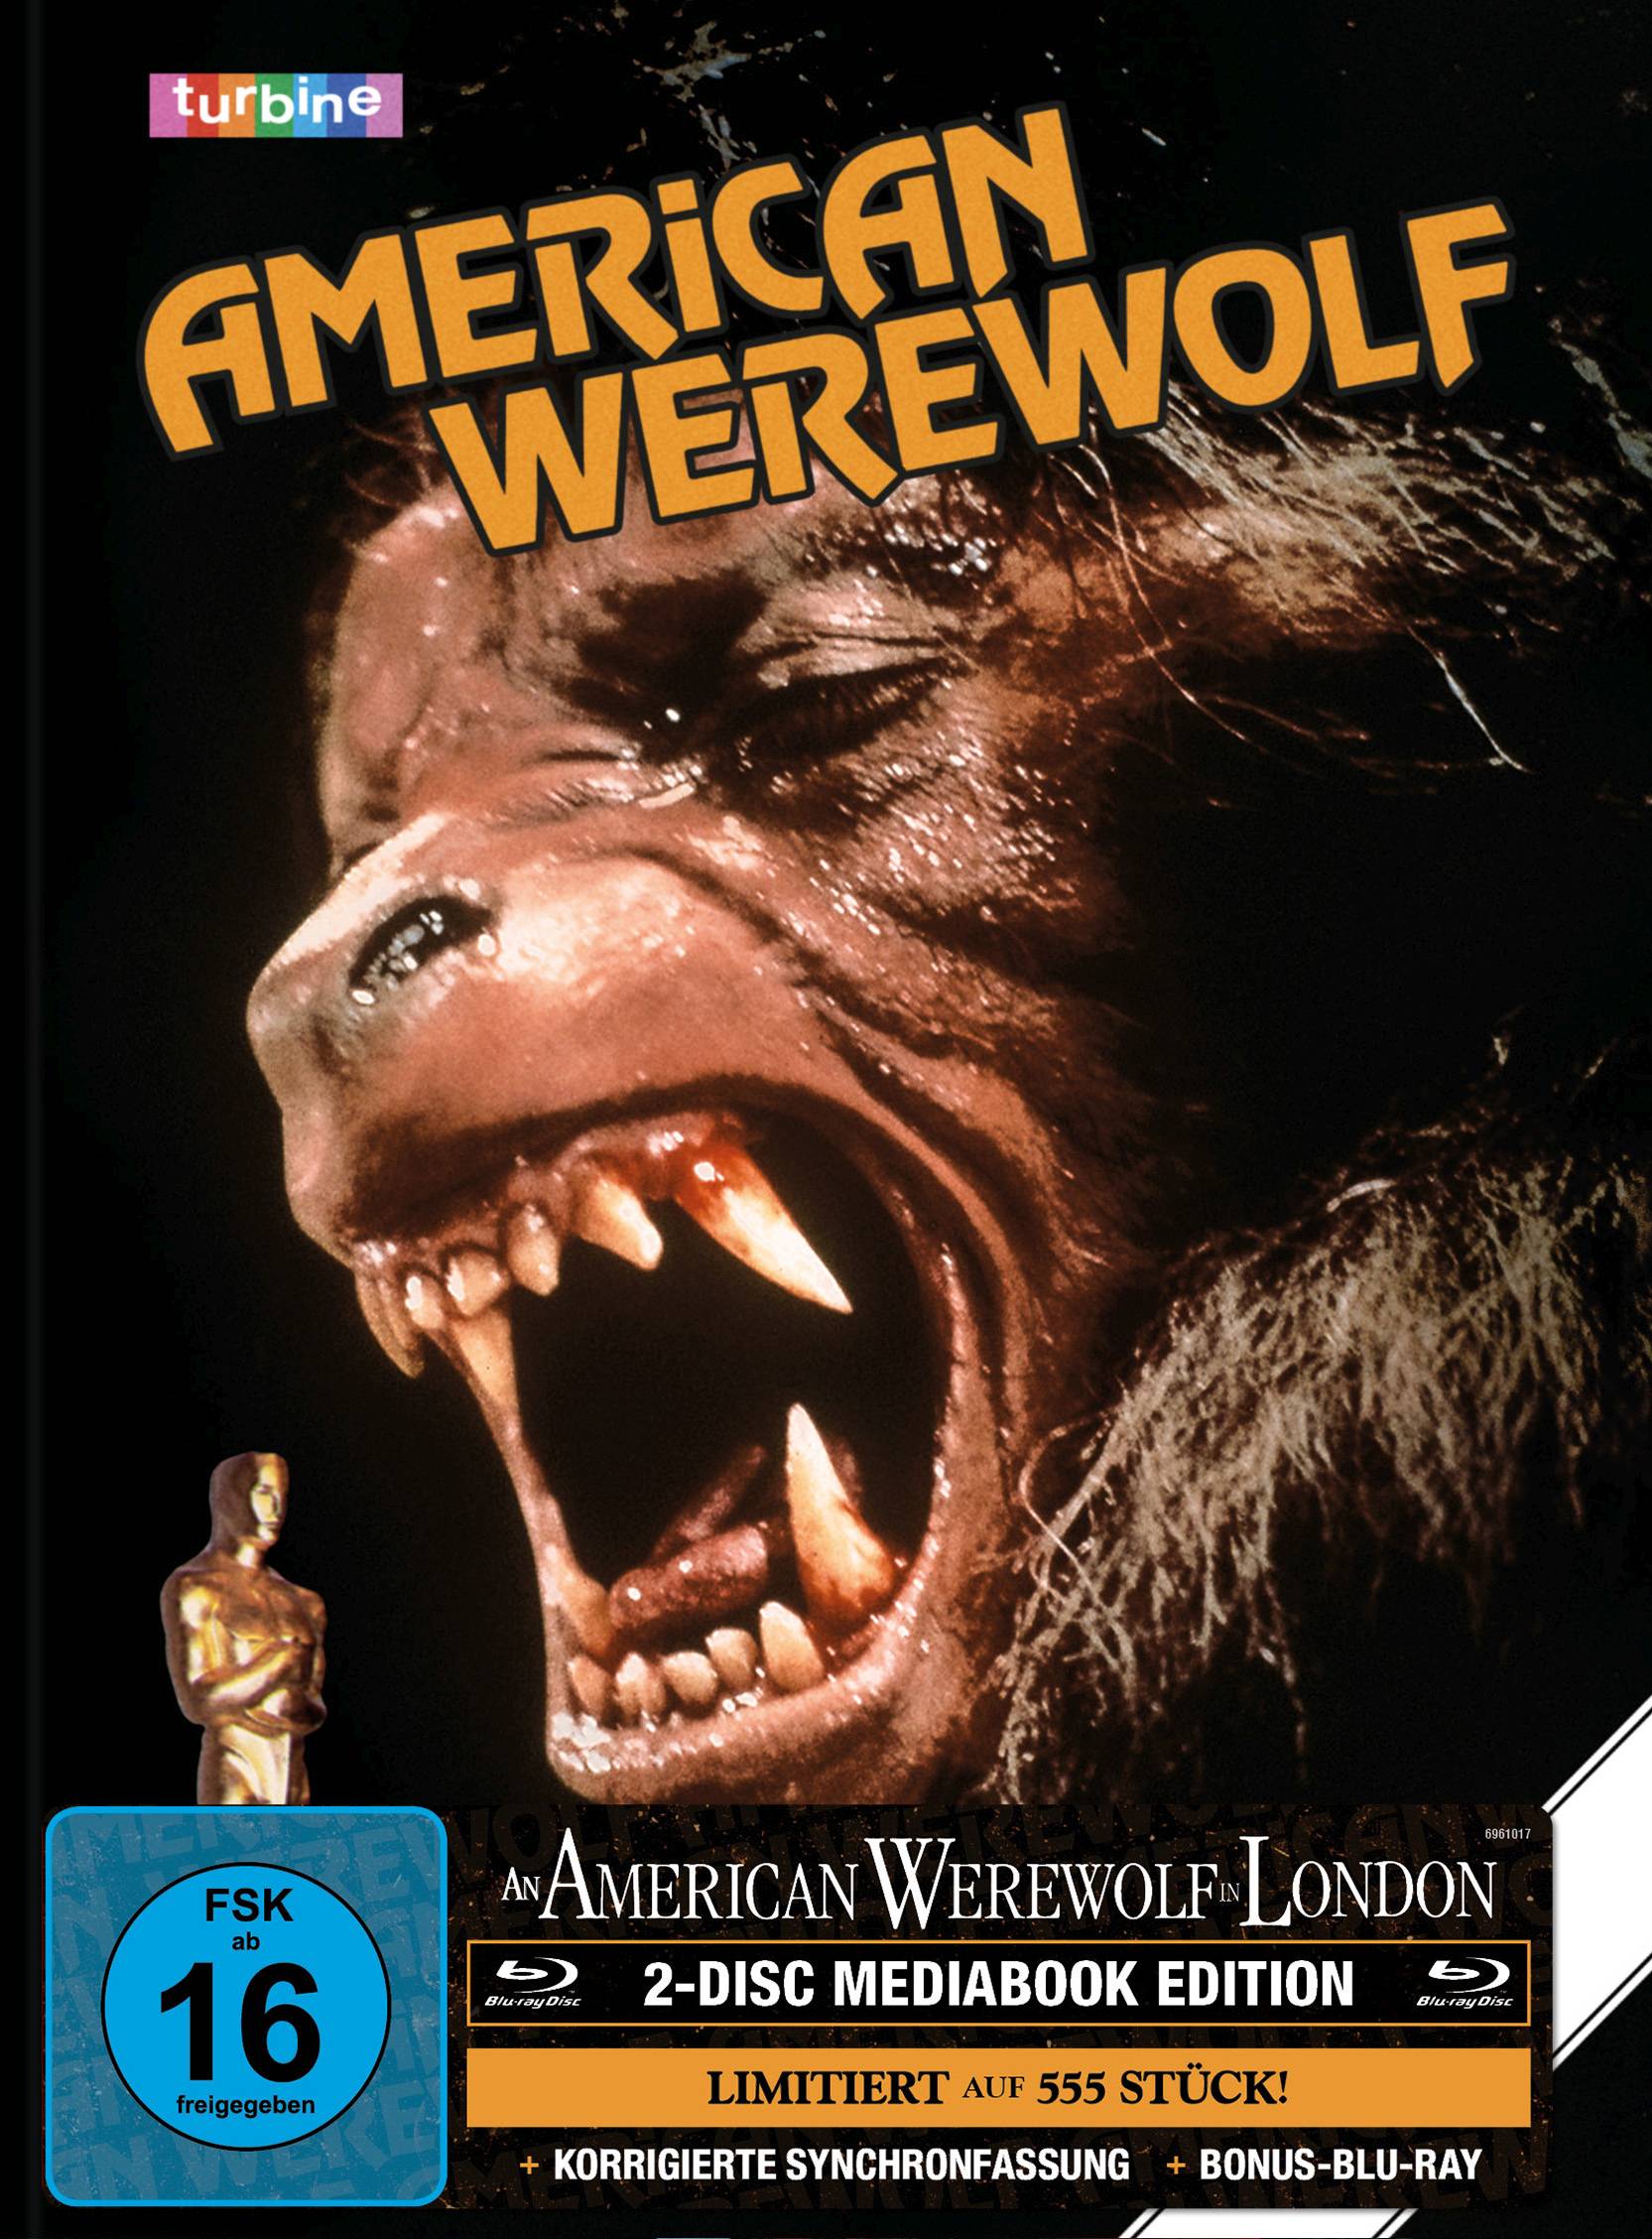 AN AMERICAN WEREWOLF IN LONDON 2-Disc-Mediabook (Blu-ray + Bonus-Blu-ray) (GER-VHS-Cover) - 555 Stk